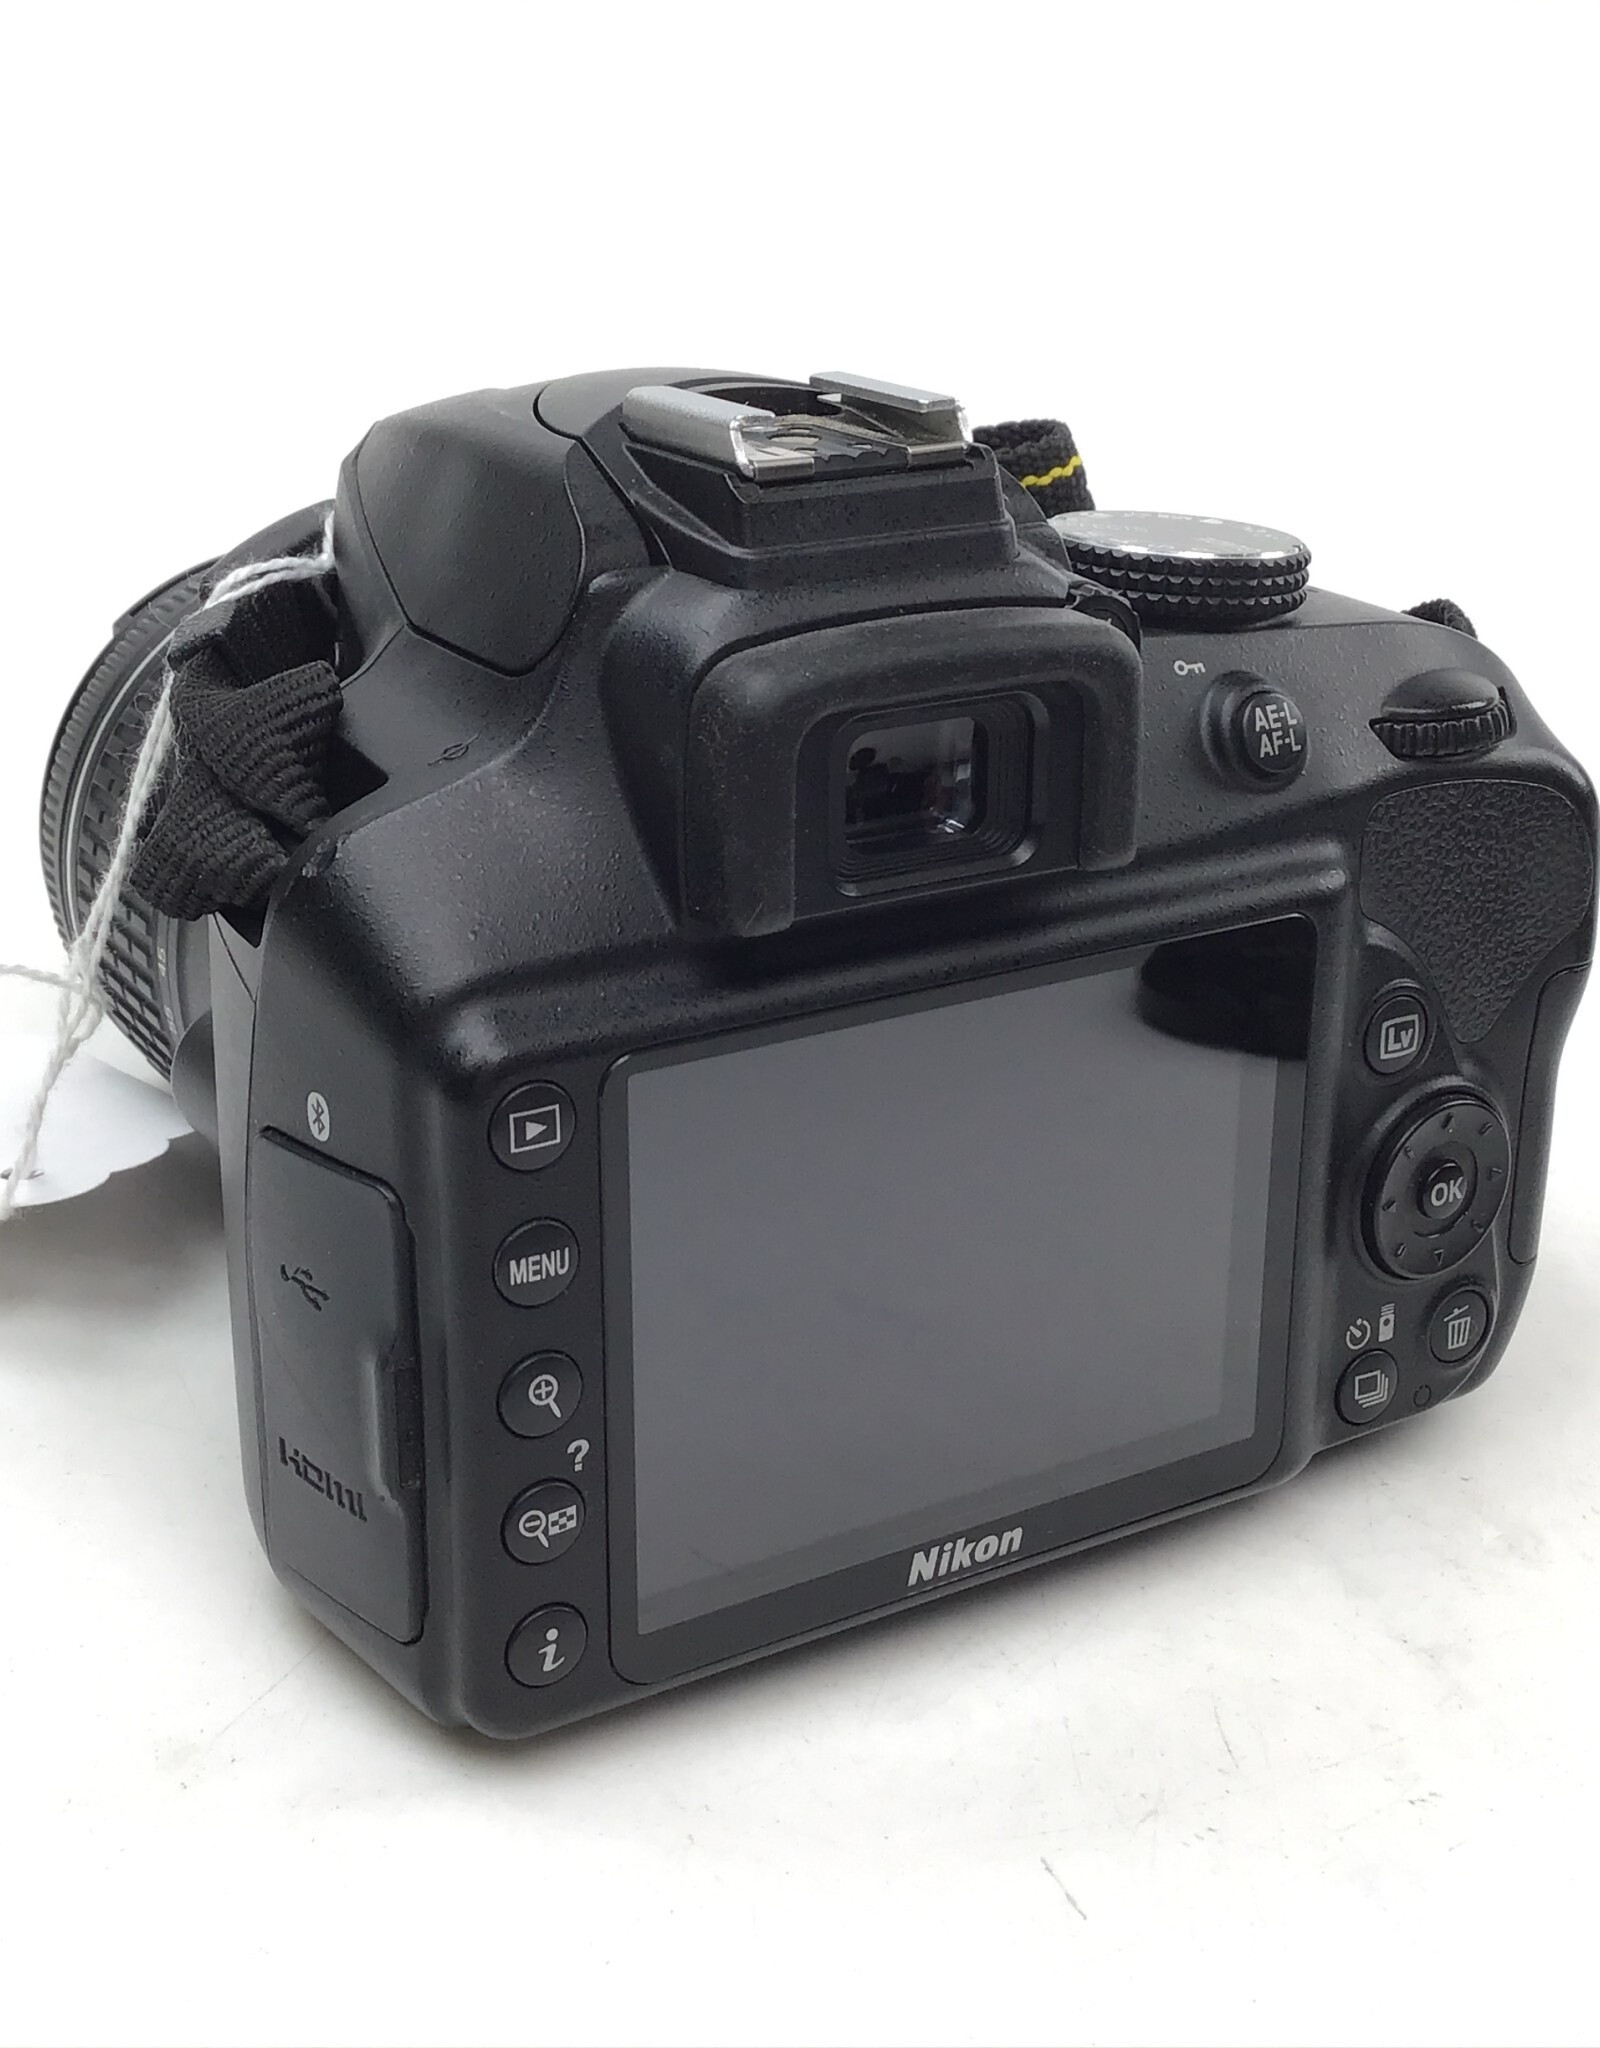 NIKON Nikon D3400 Camera w/ AF-P 18-55mm Used Good